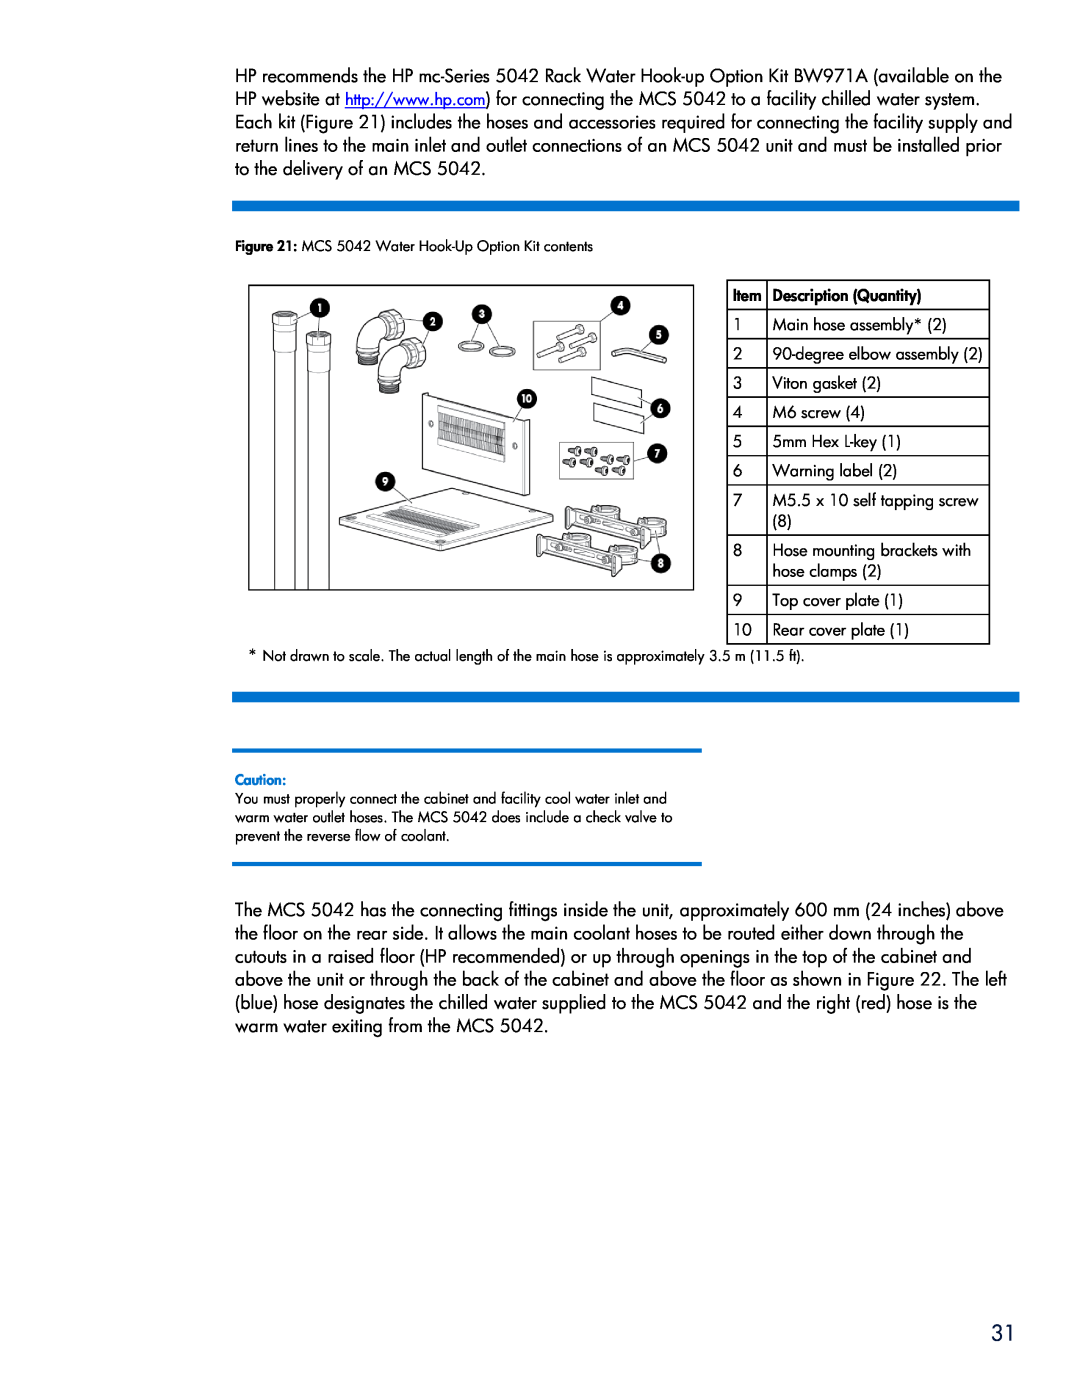 HP Modular Cooling System manual Description Quantity 